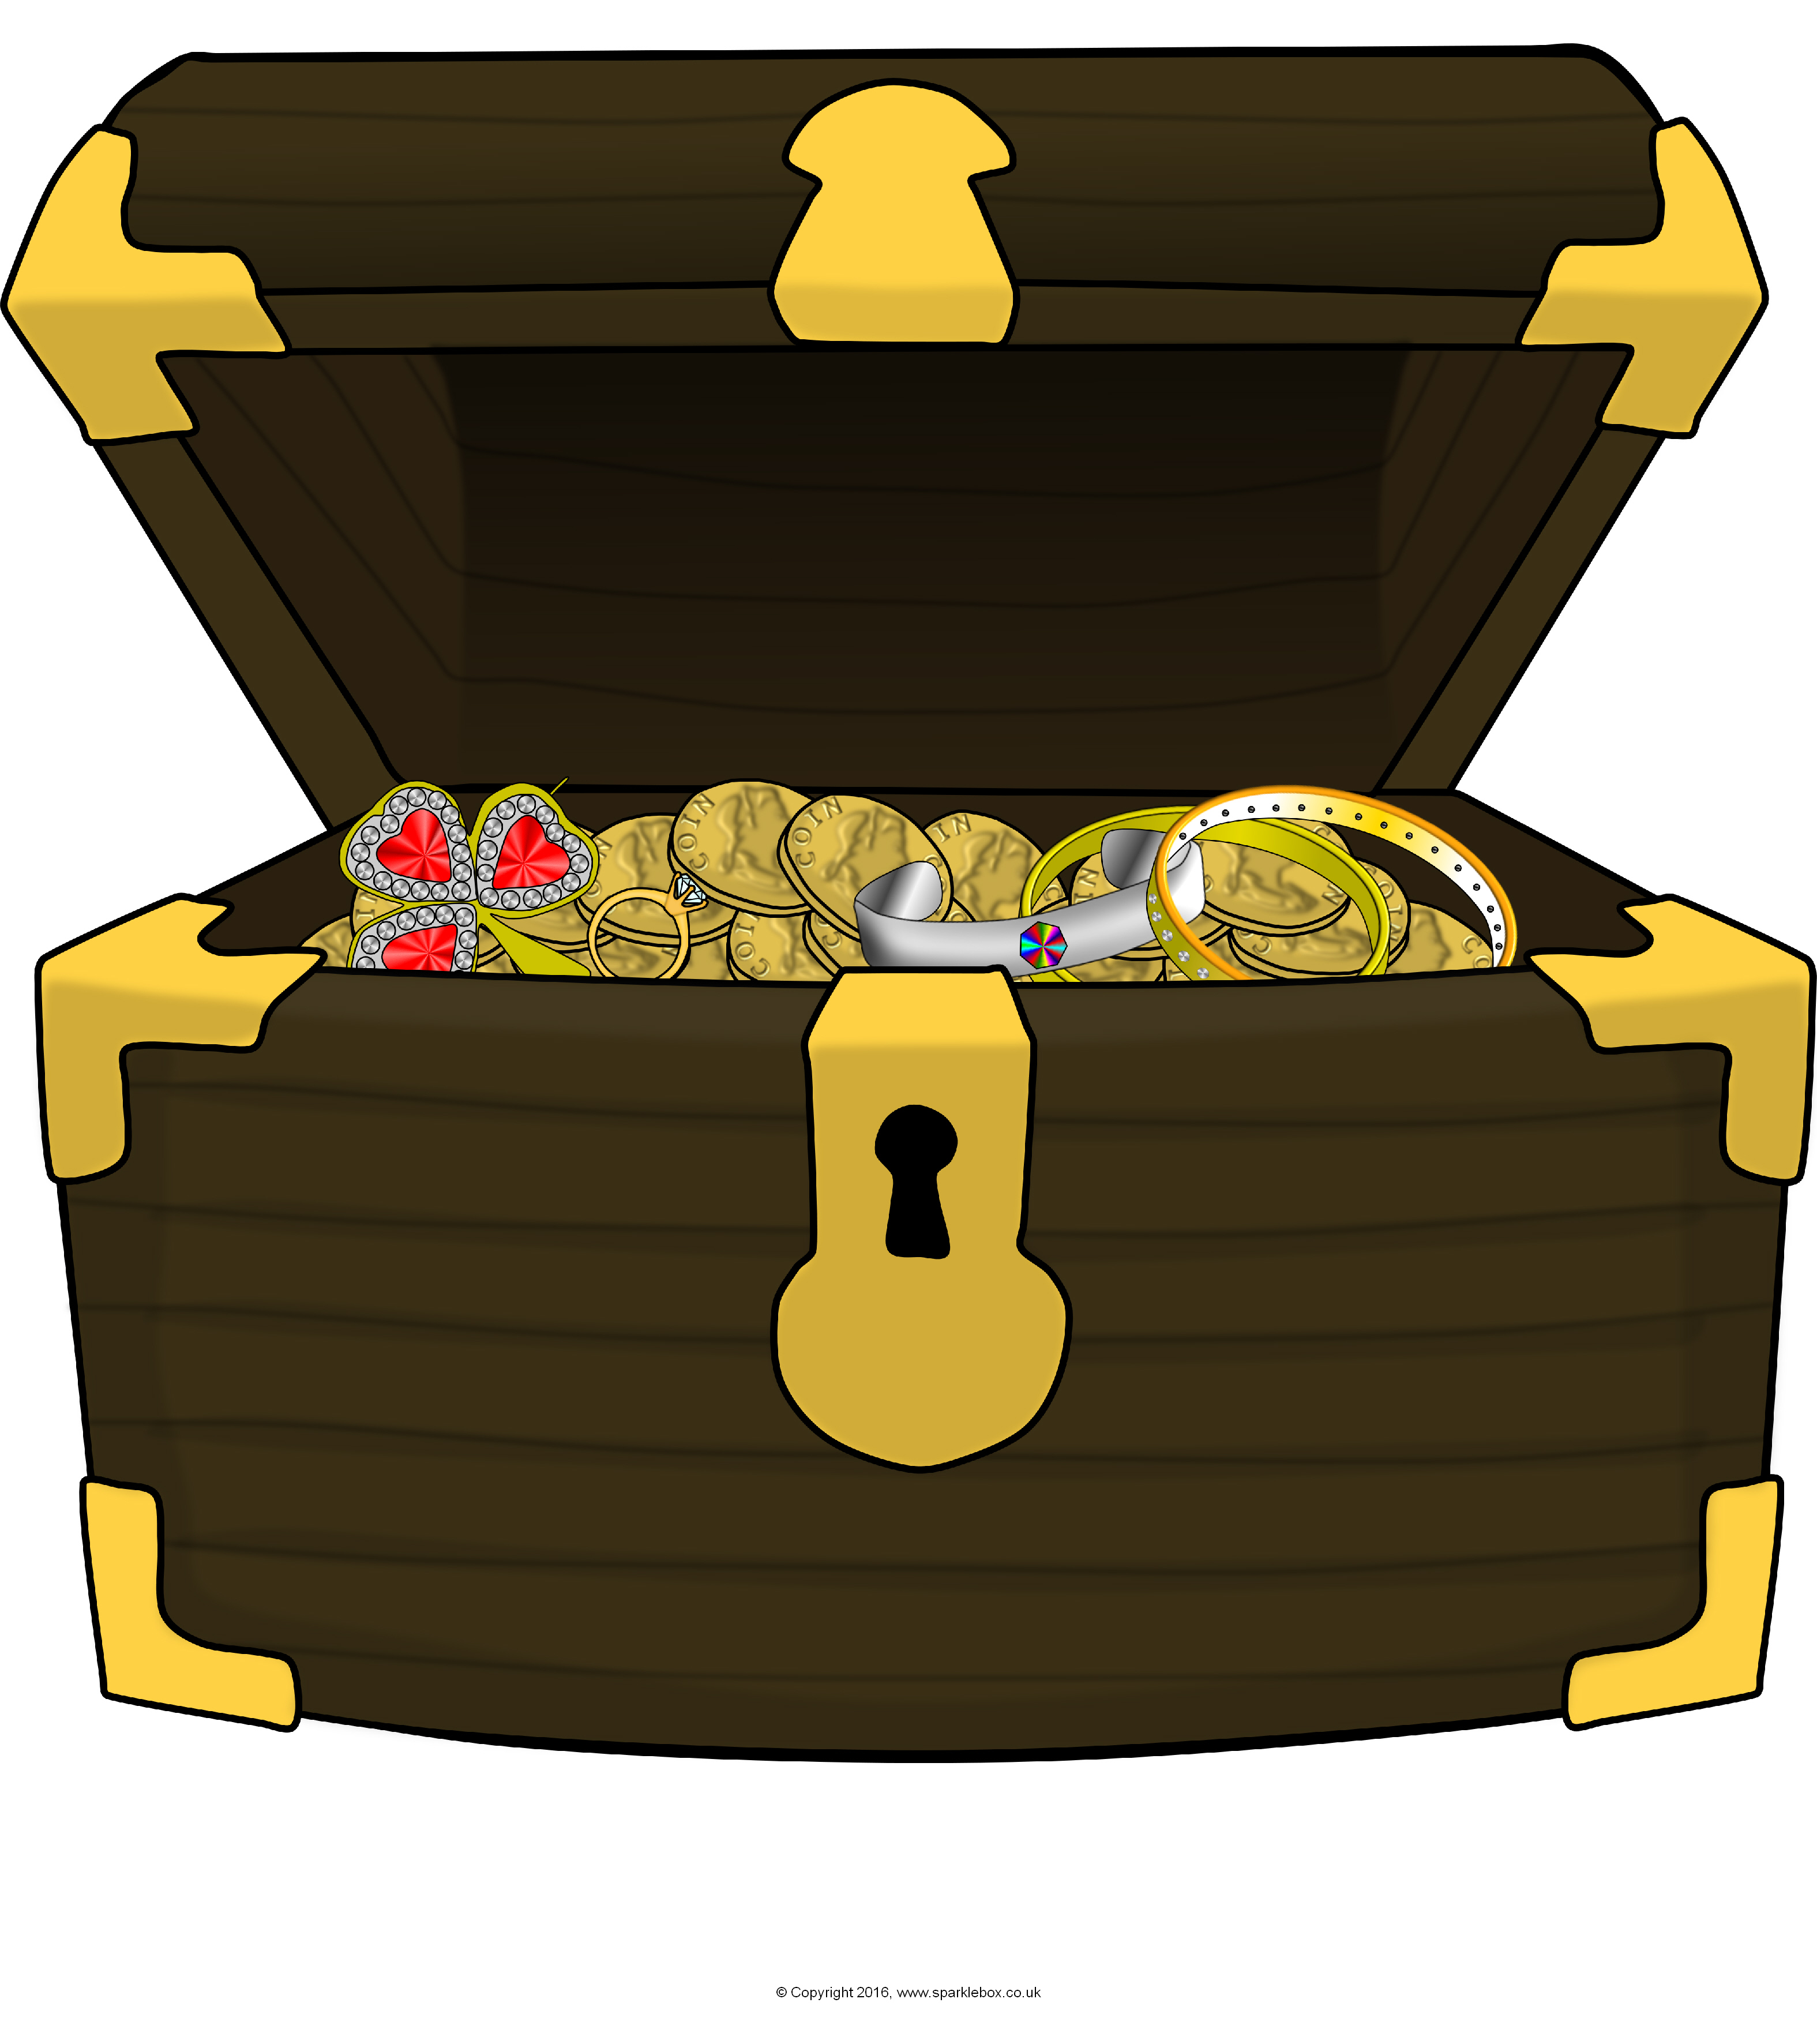 Клад. Пиратский сундук с сокровищами. Пиратский сундук с золотом. Сундук с кладом. Сундучок с сокровищами.